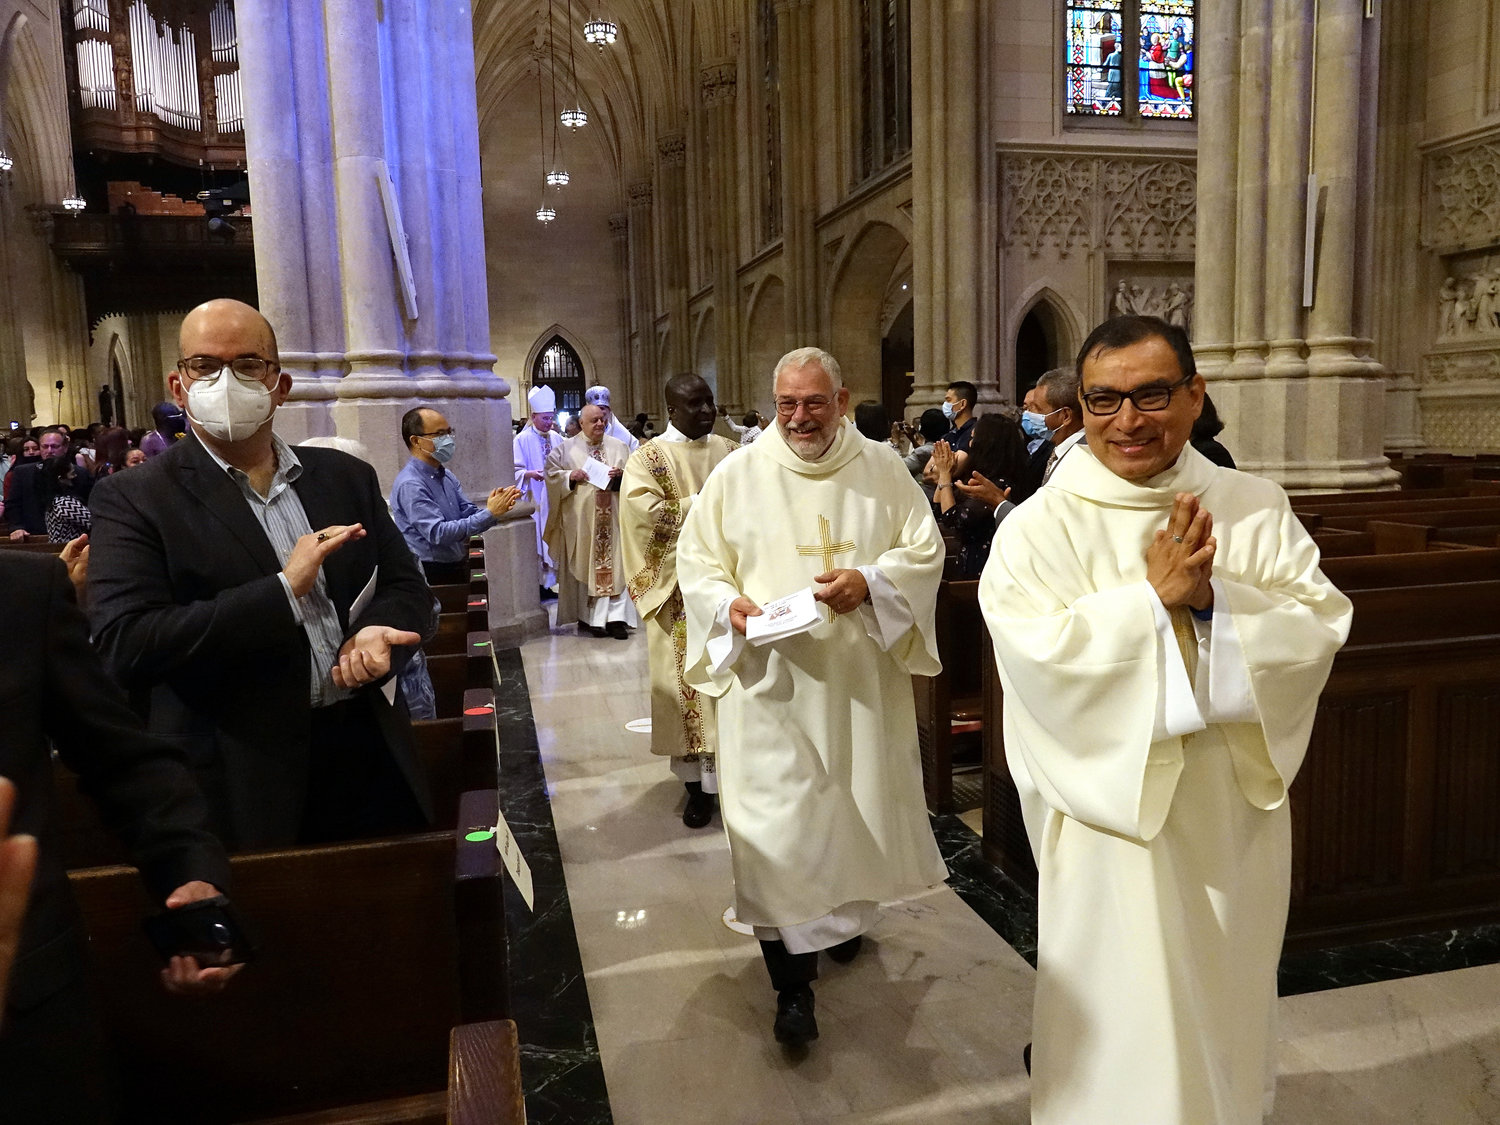 The new deacons, led by Deacon Cortés and Deacon Schiavone, accept congratulations from the congregation.